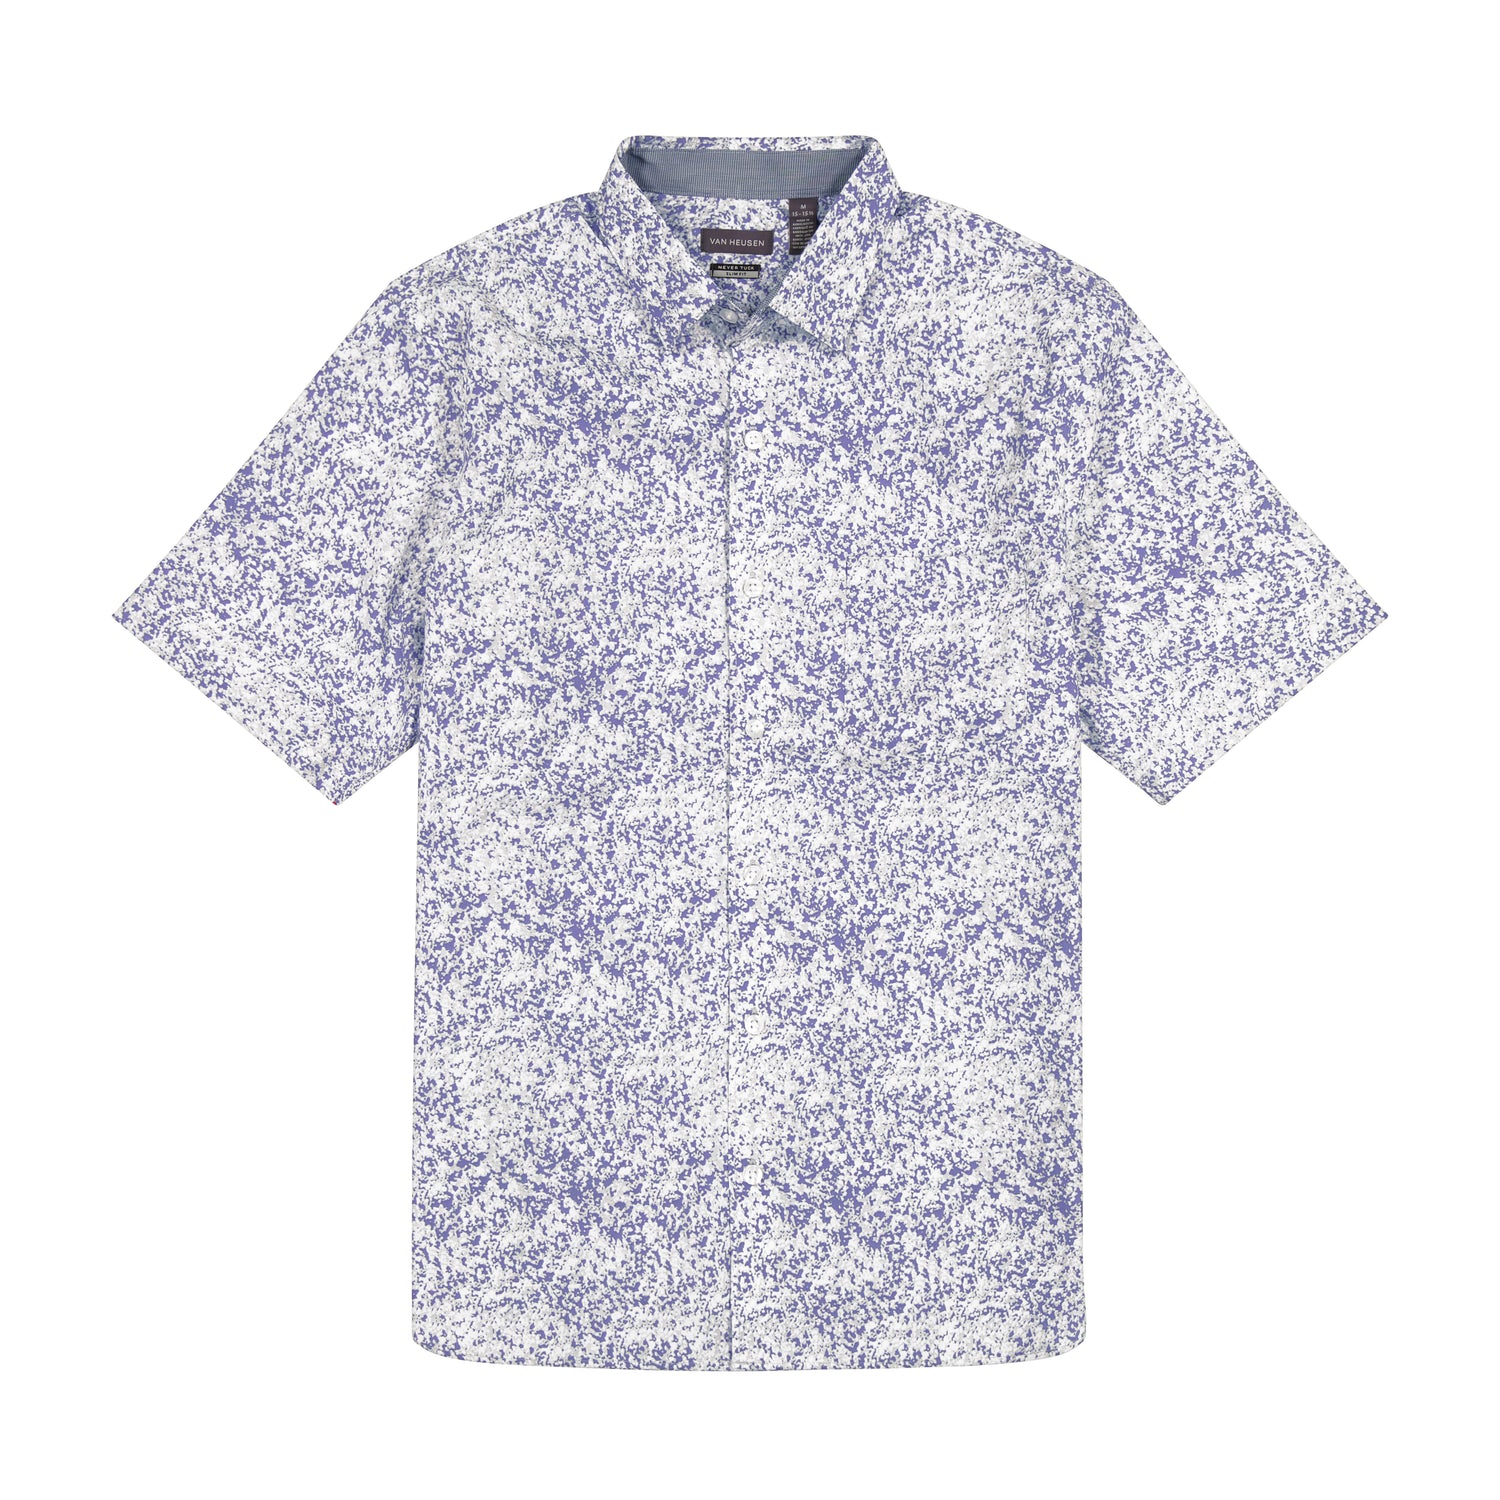 Essential Stain Shield Camo Print Short Sleeve Shirt - Slim Fit